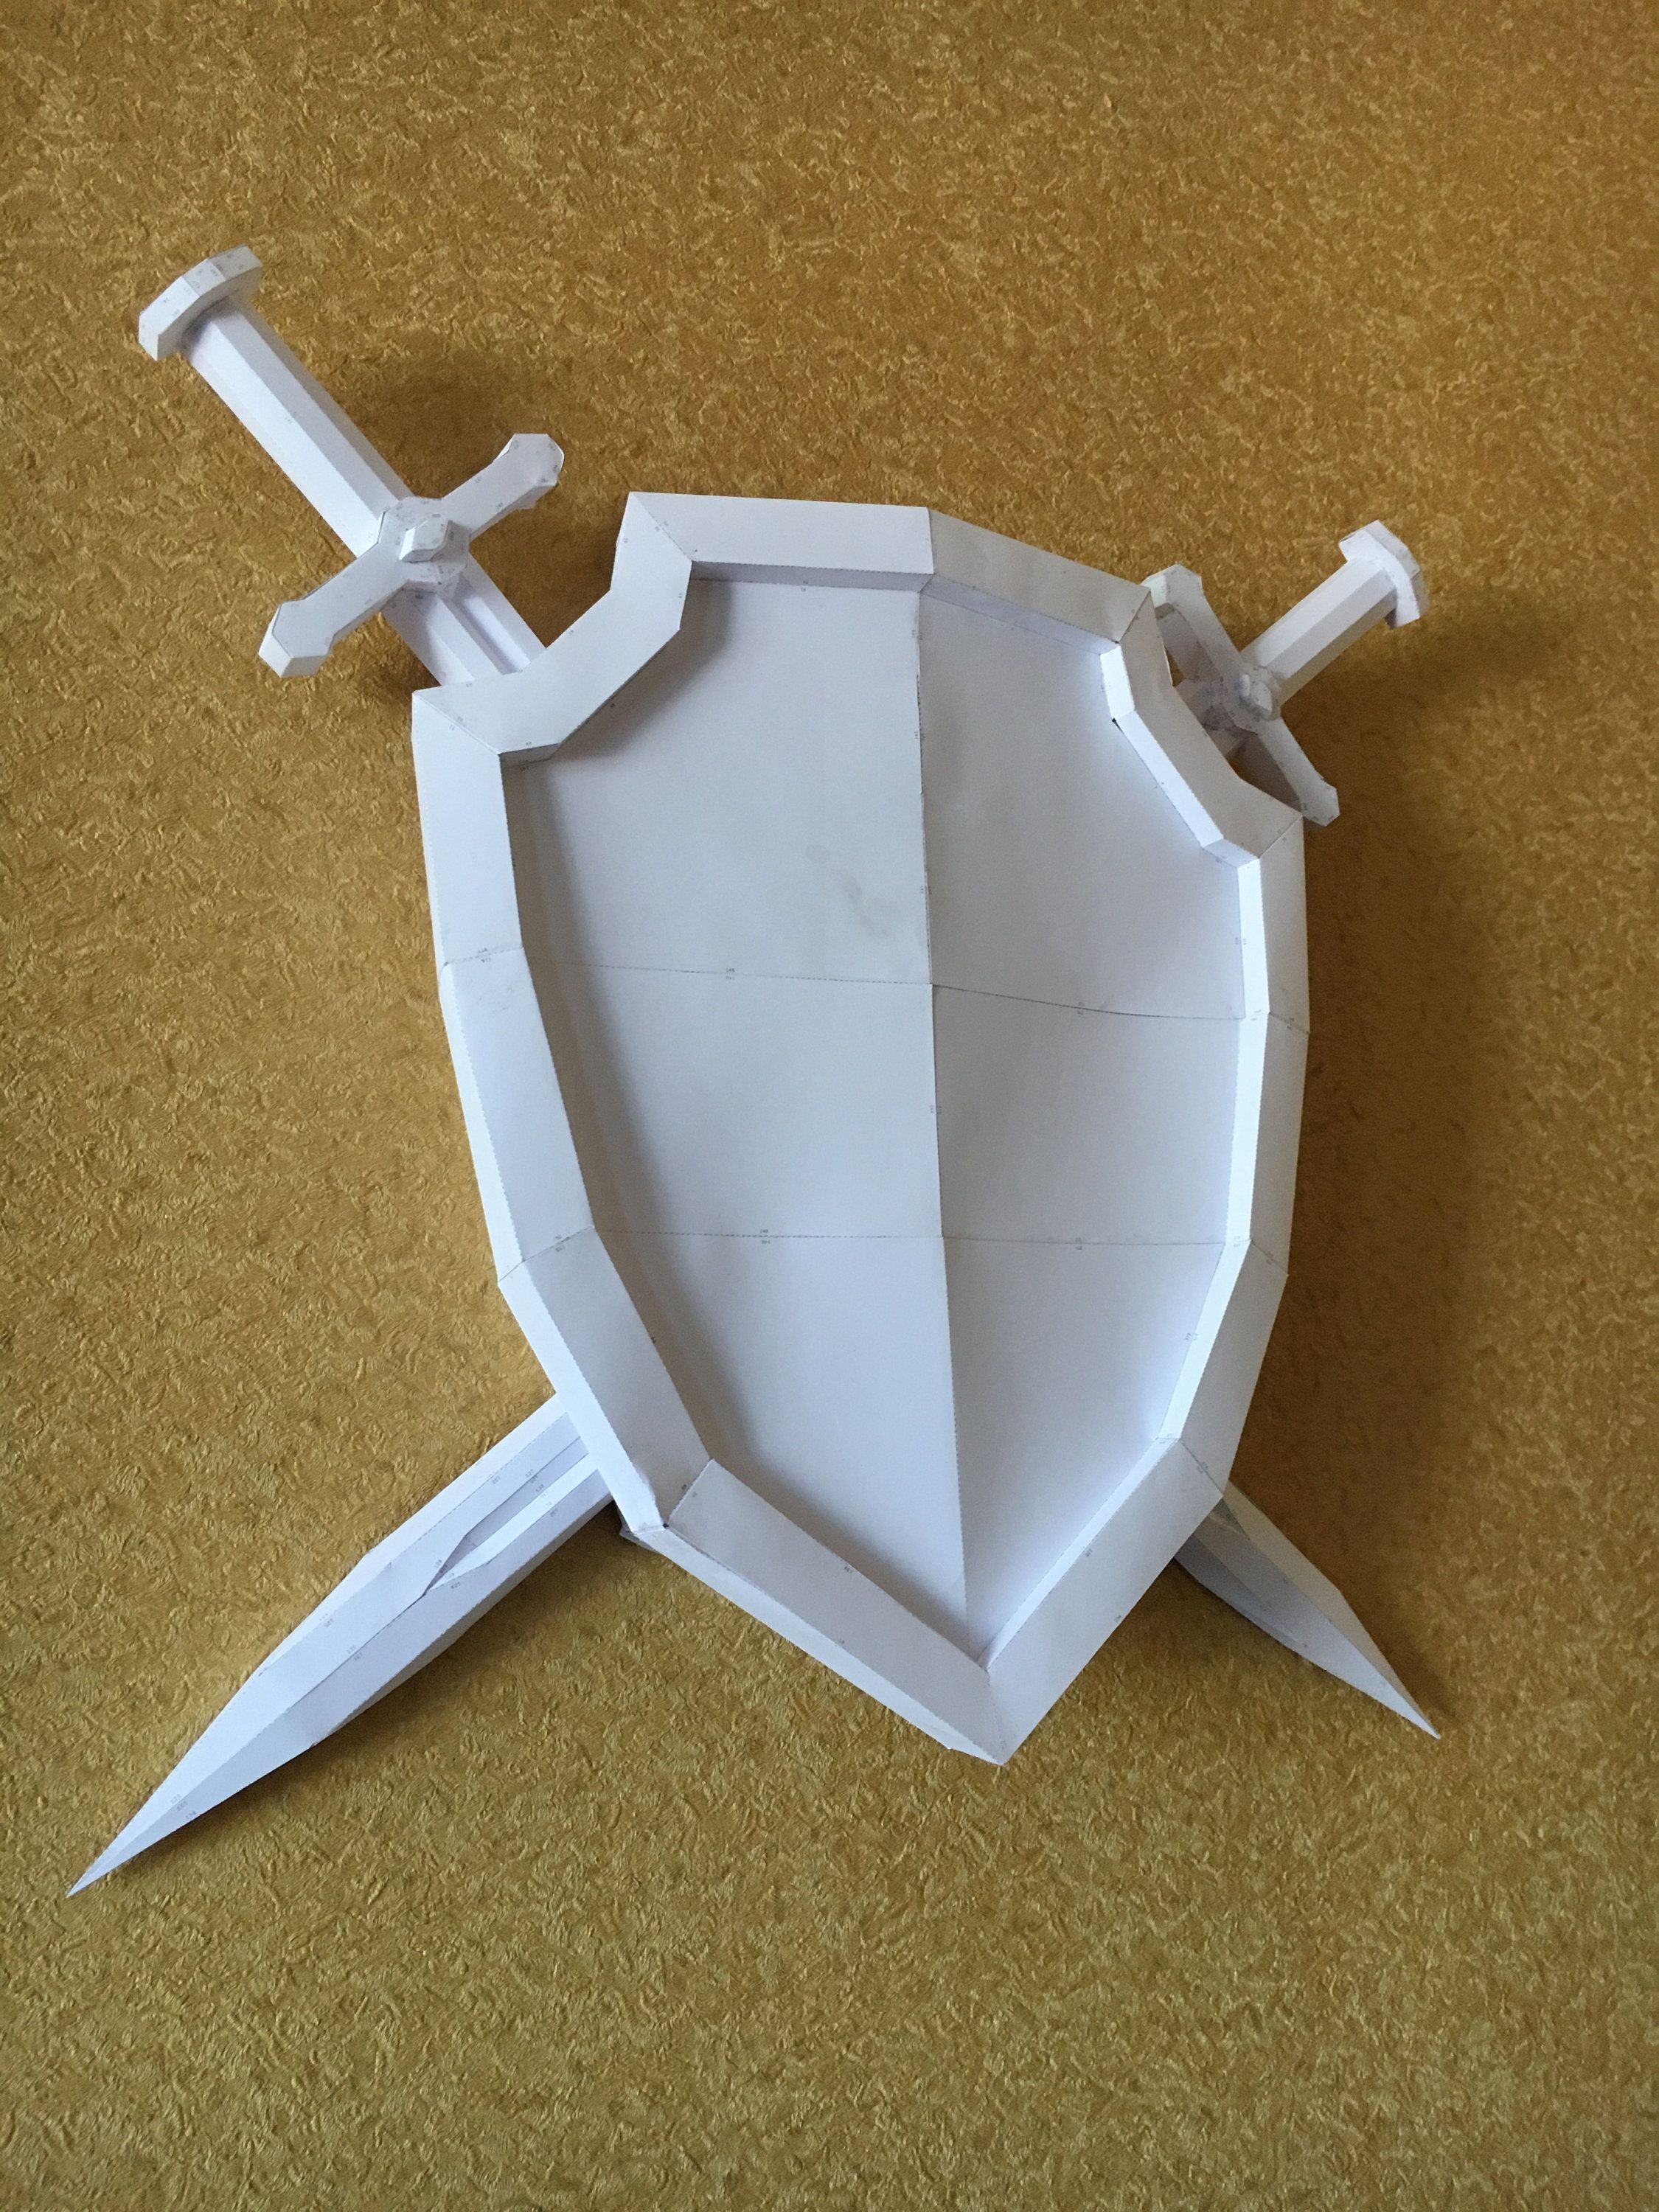 Realistic Papercraft Sword Shield Diy Papercraft Model ÐÑÐ¼Ð°Ð¶Ð½ÑÐµ Ð¸Ð·Ð´ÐµÐ Ð¸Ñ